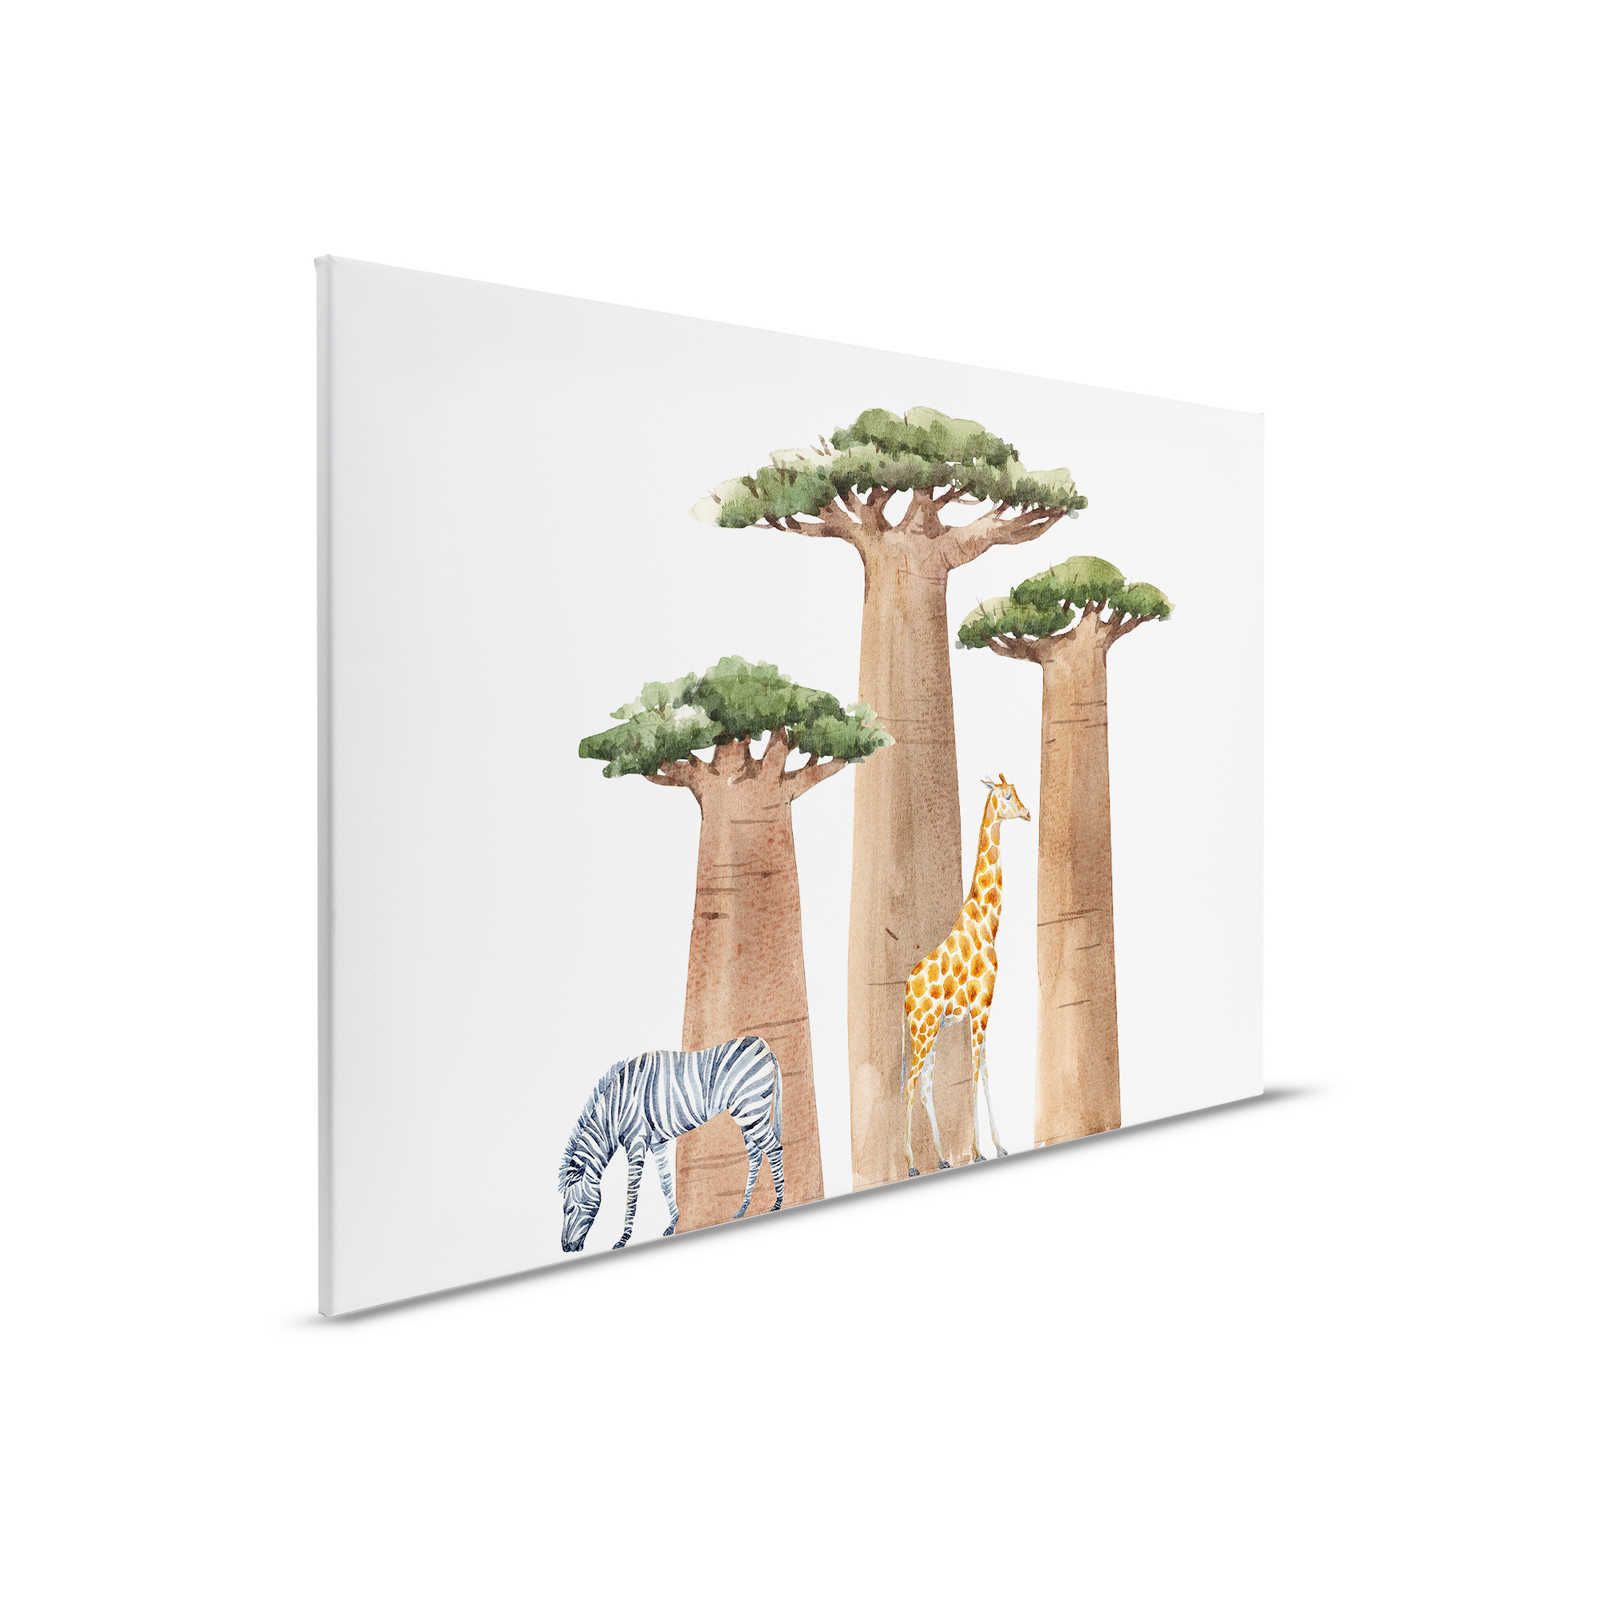 Canvas Savannah with Giraffe and Zebra - 90 cm x 60 cm
